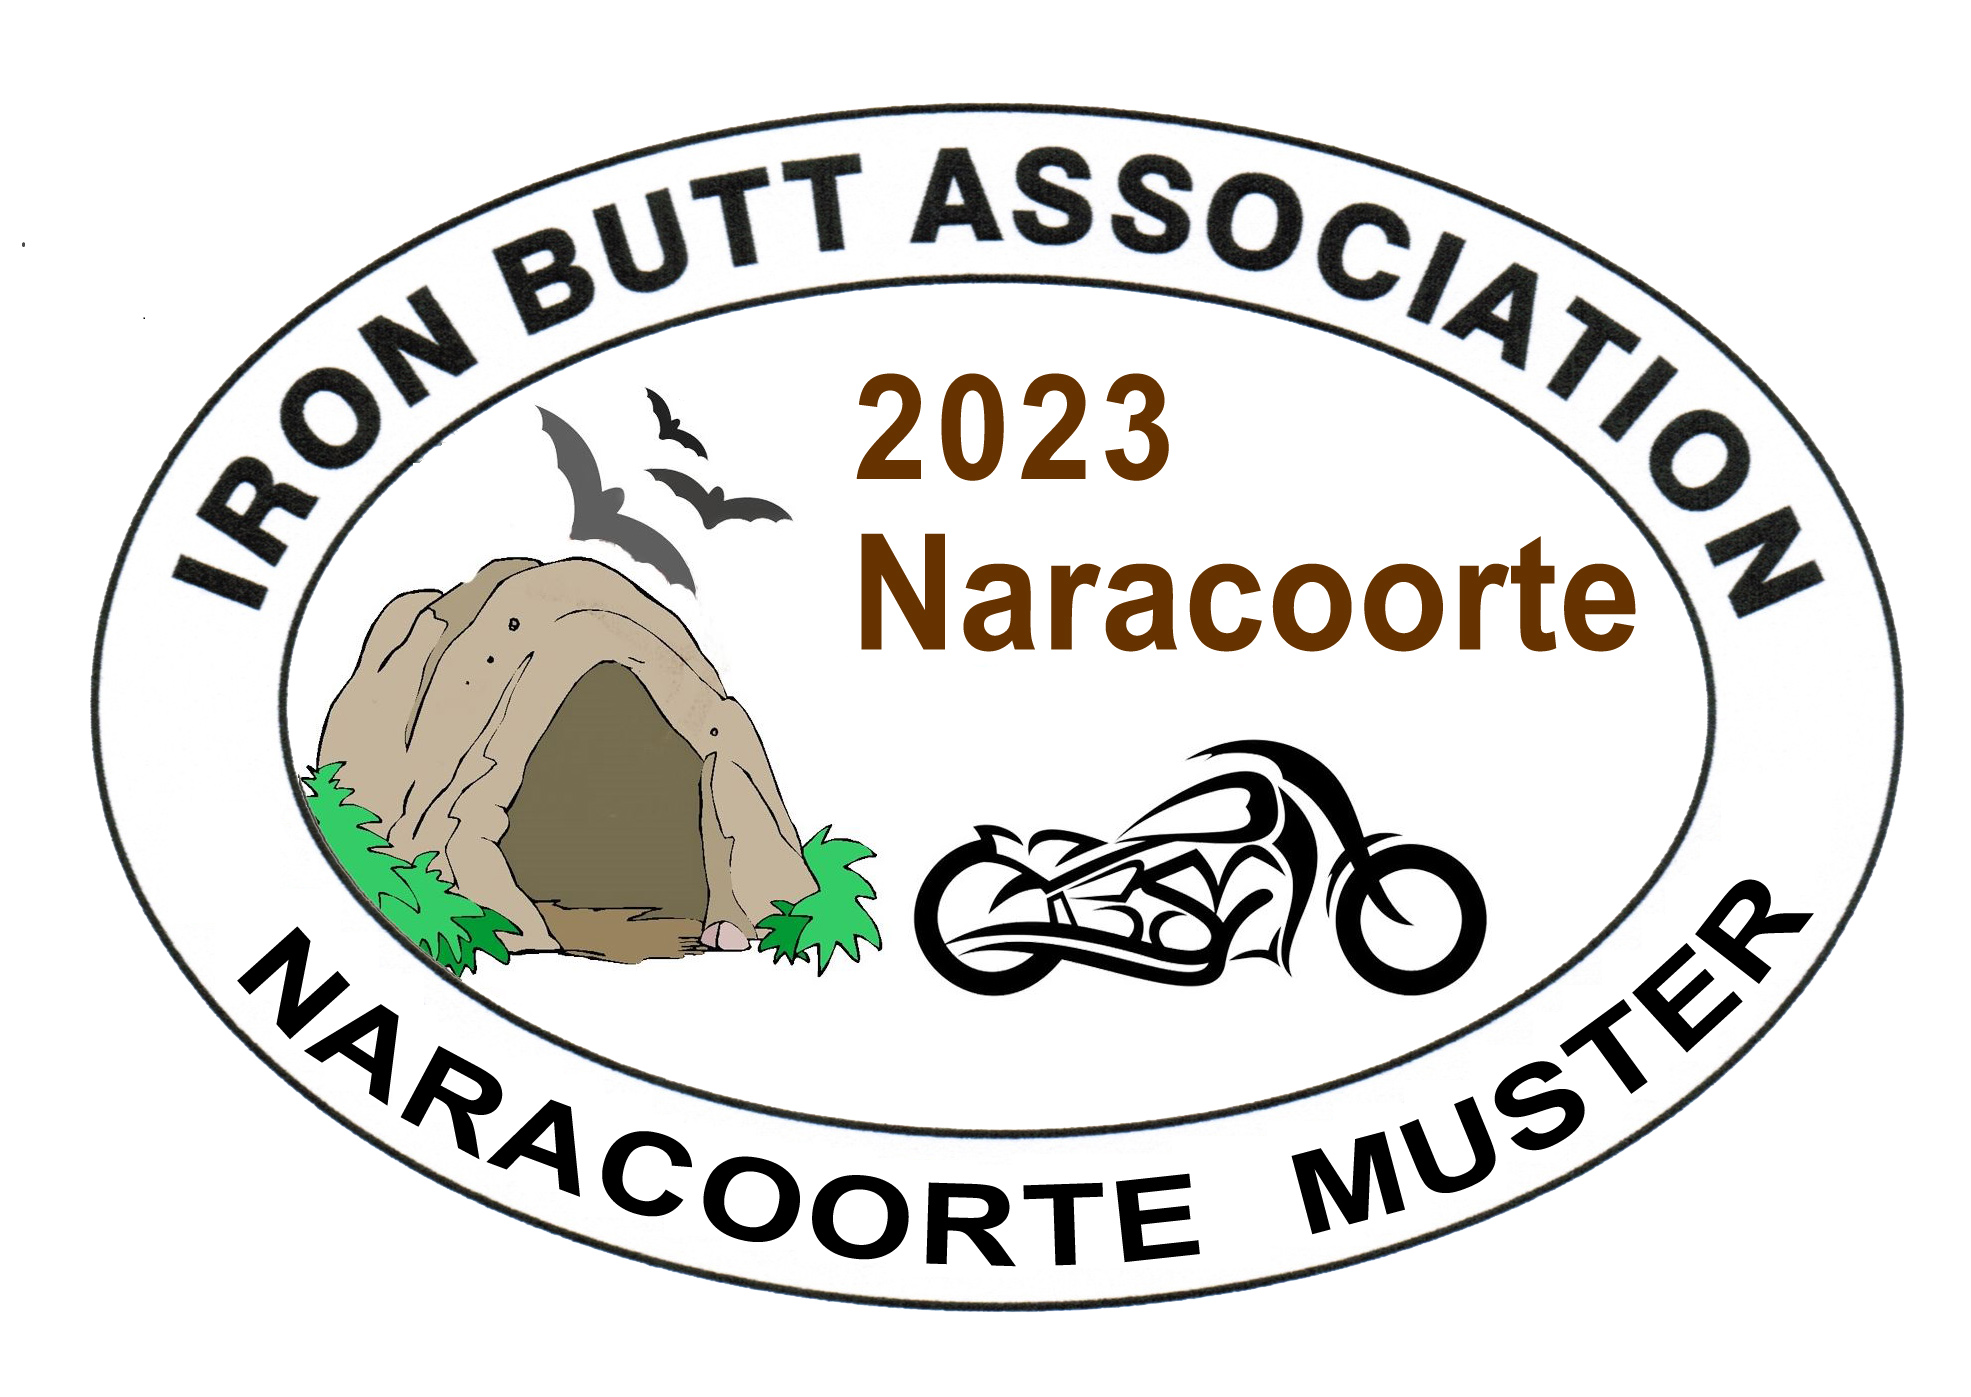 Naracoorte Muster 2023